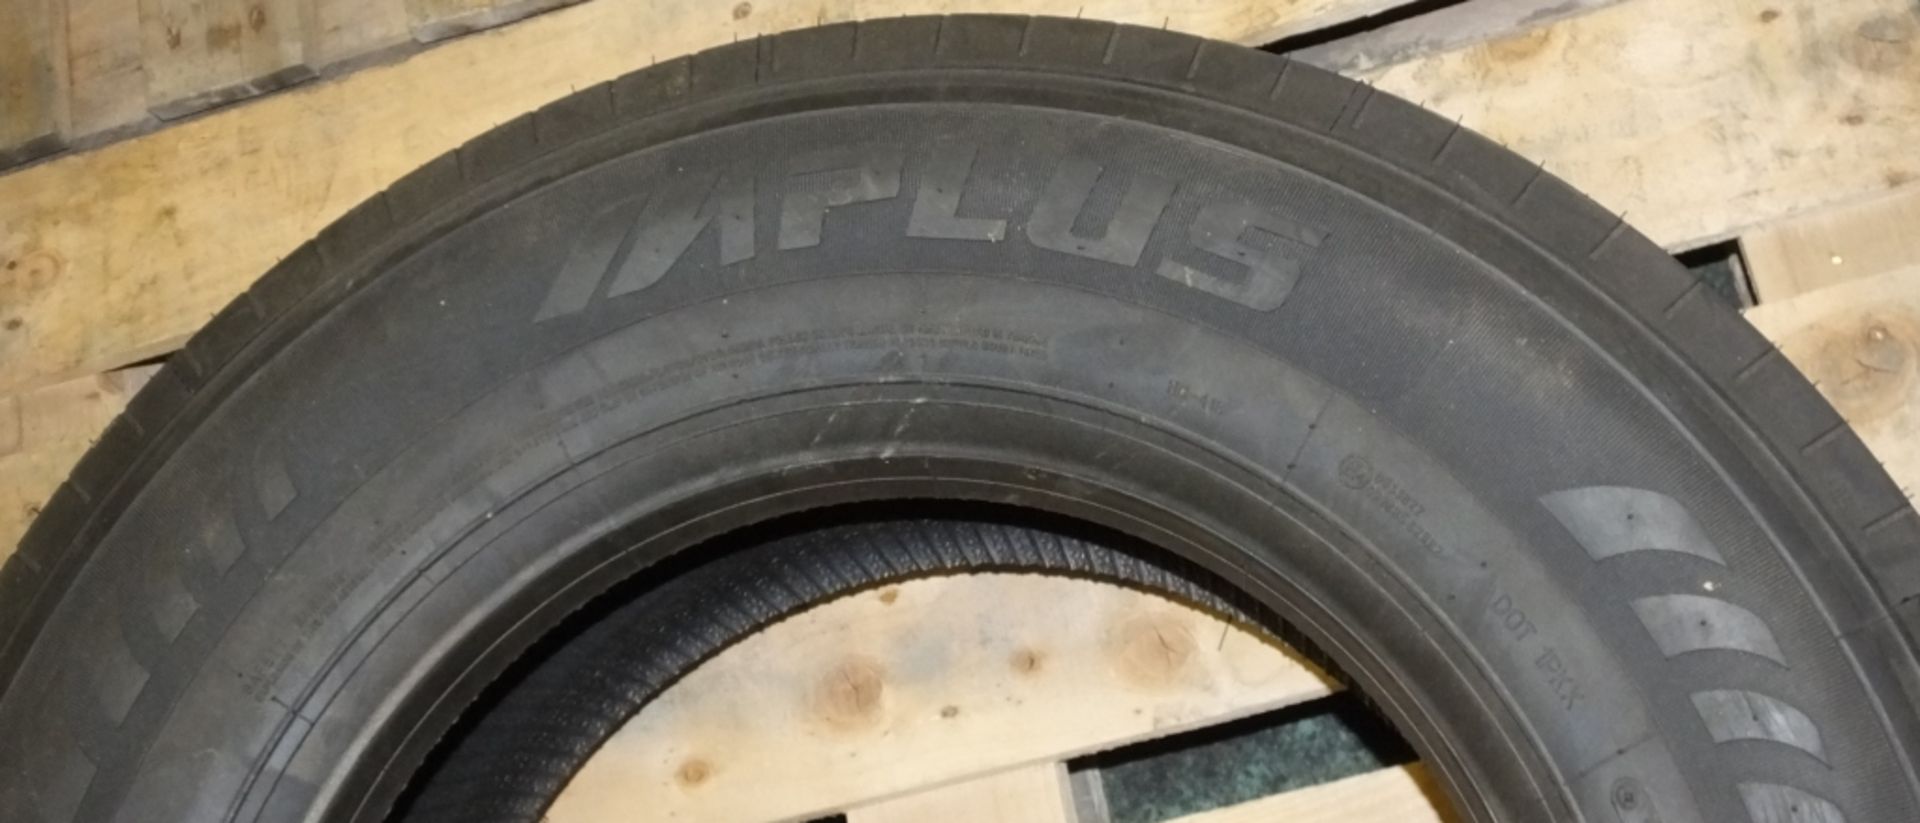 Alplus 265 / 70R 19.5 S201 tyre (new & unused) - Image 3 of 6